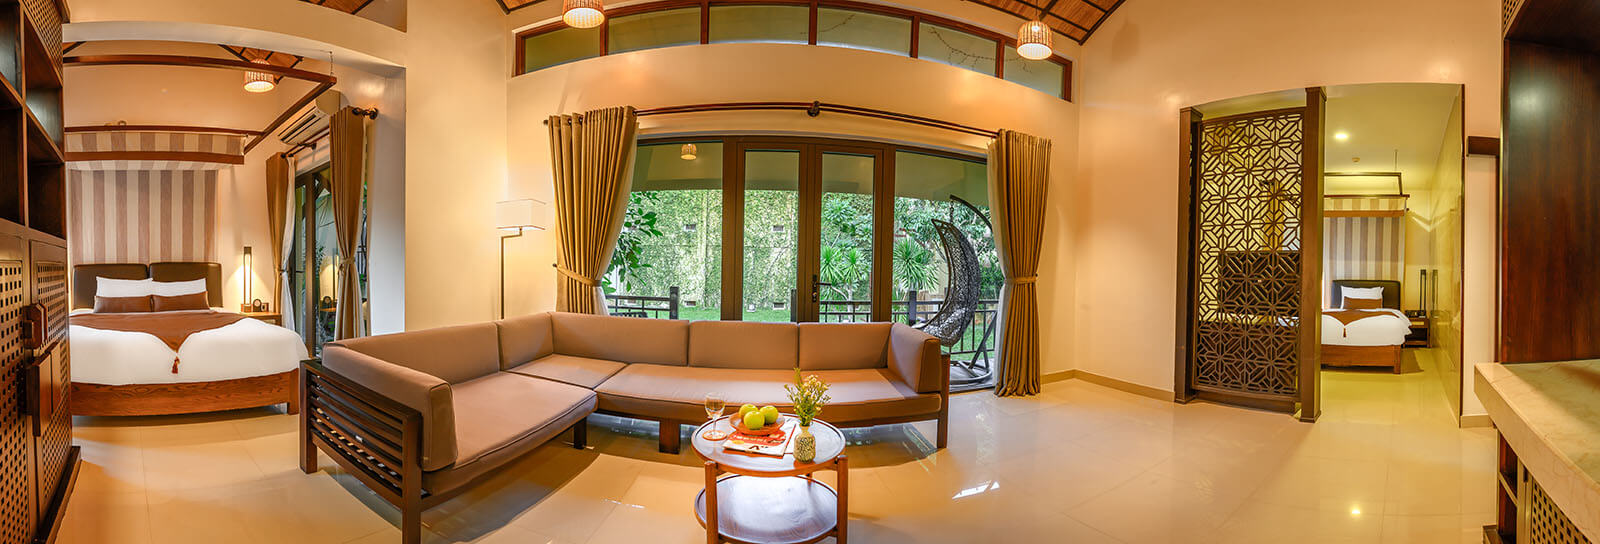 The Blossom Resort Da Nang Lo A1 A2 Khu Dao Xanh Danang Room 07